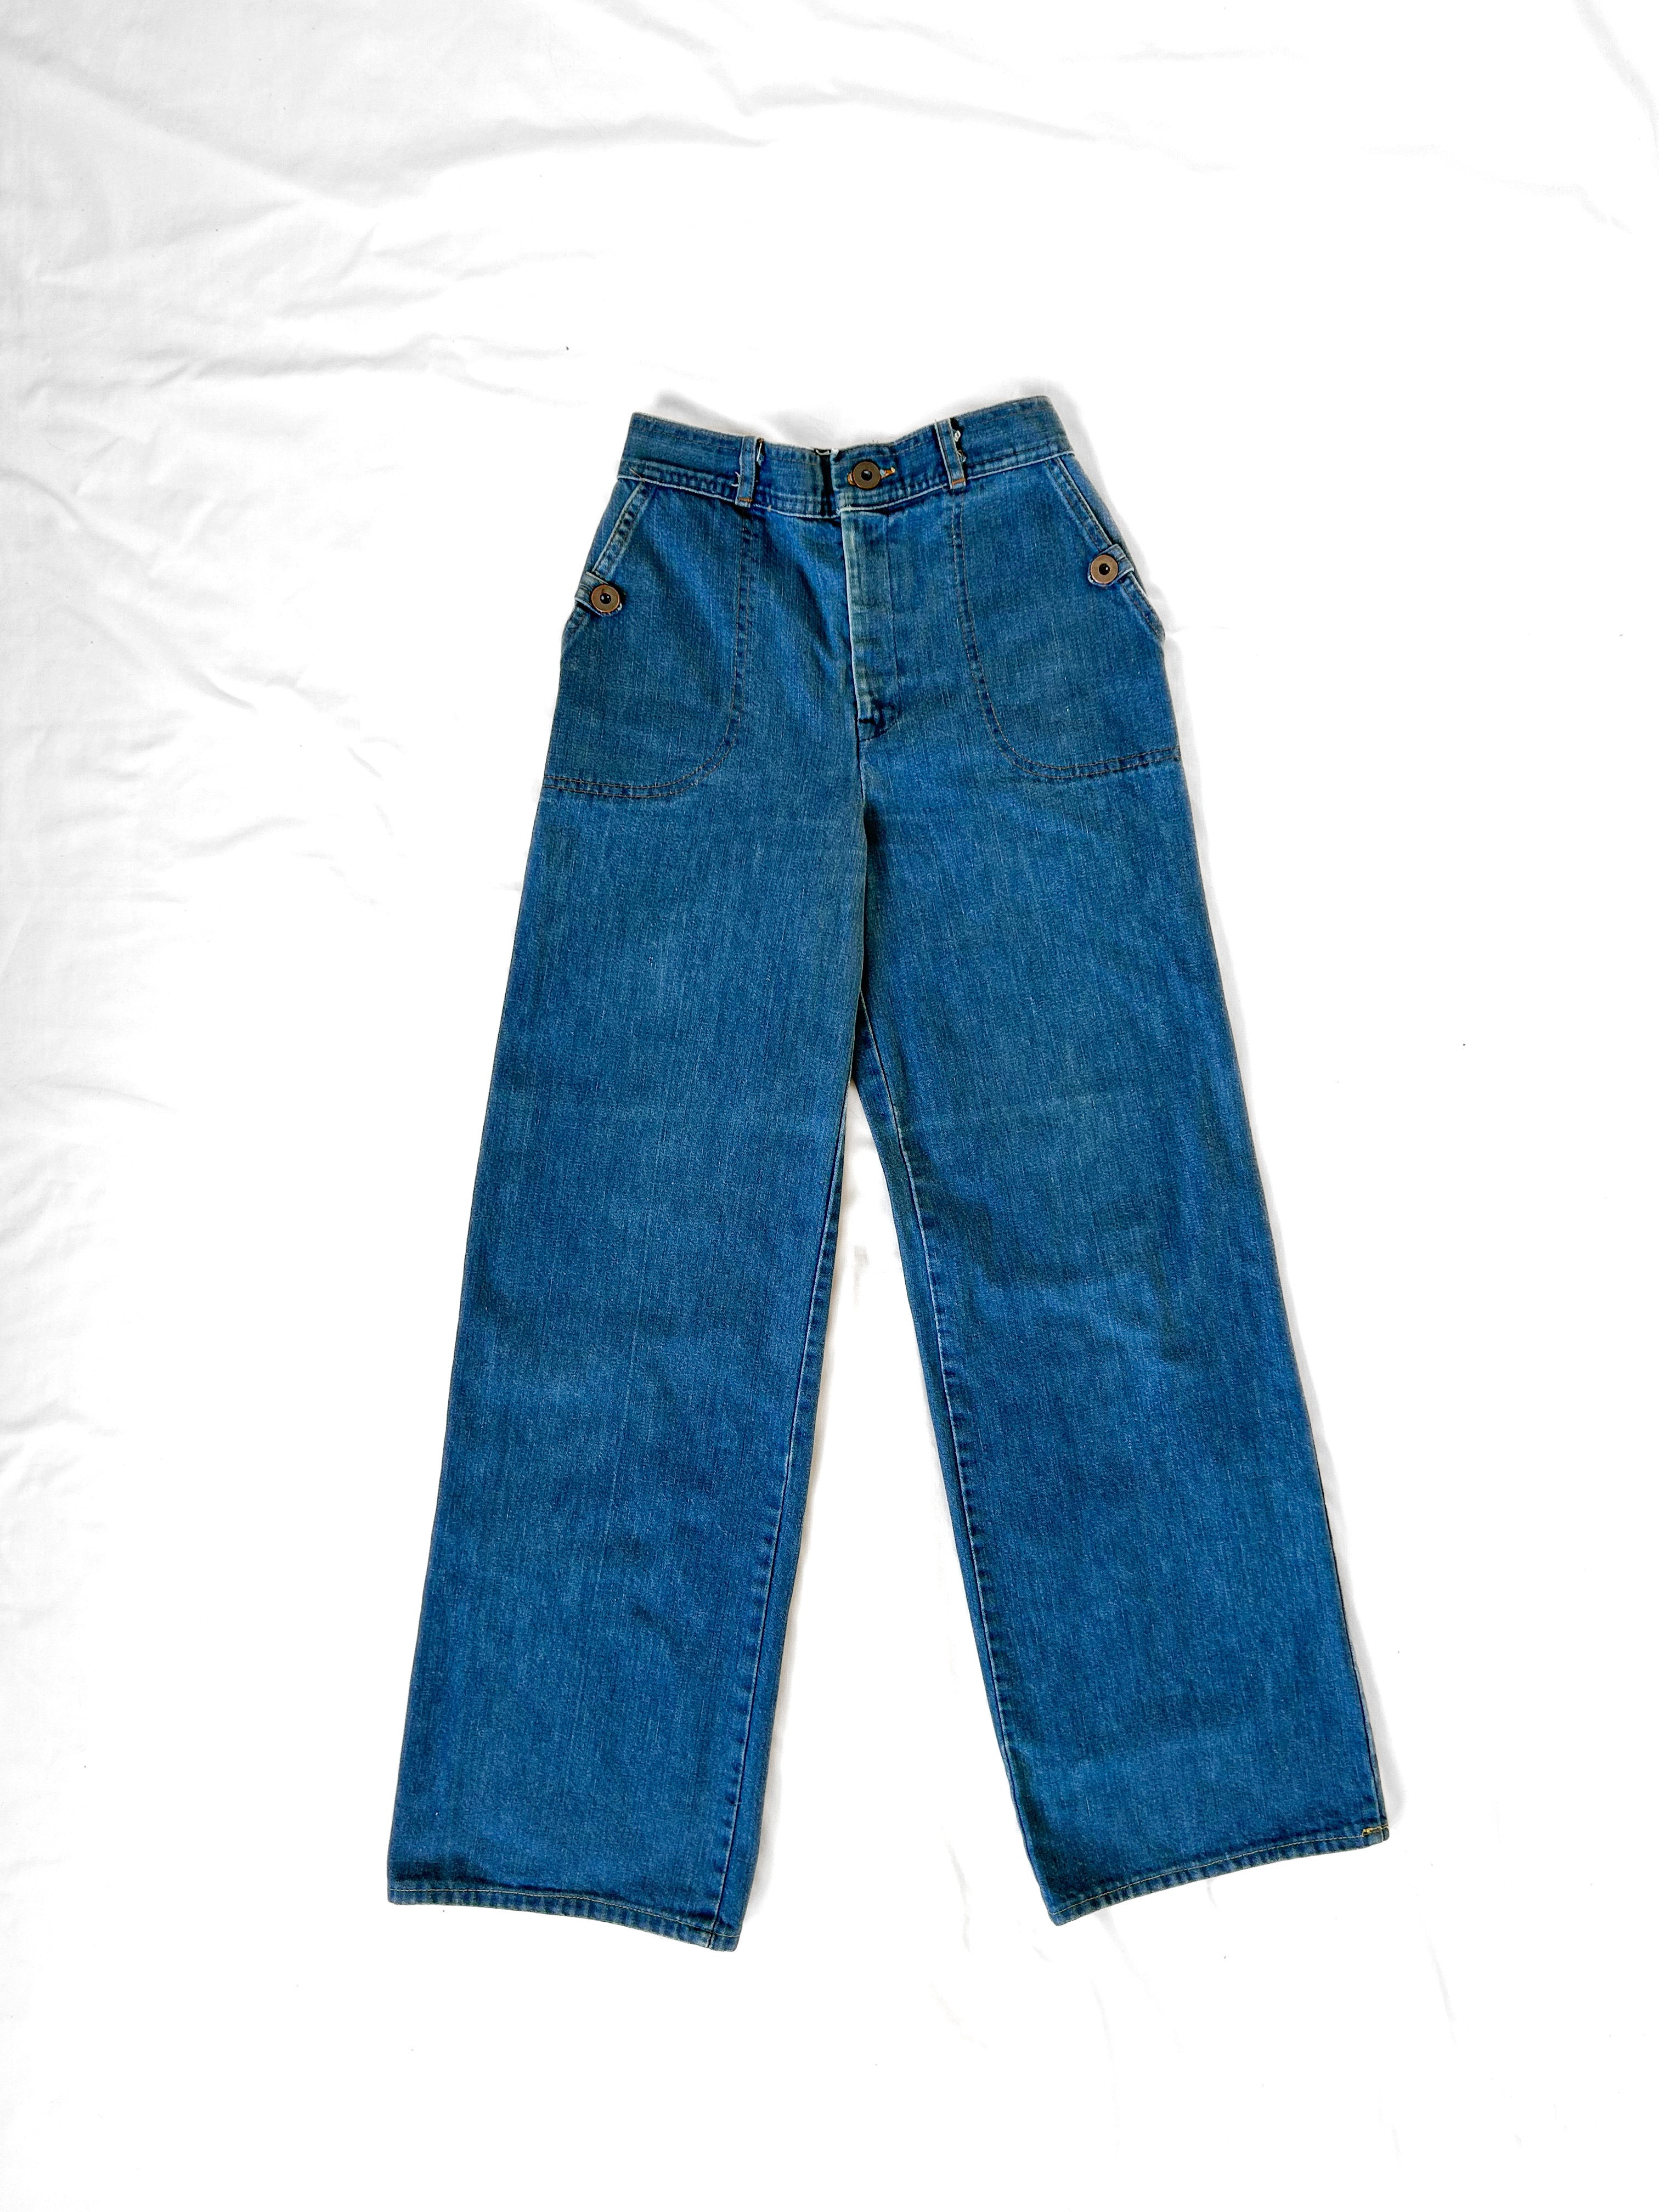 70s Vintage Jeans High Rise 25” Waist, Straight Leg Trouser Style Jeans